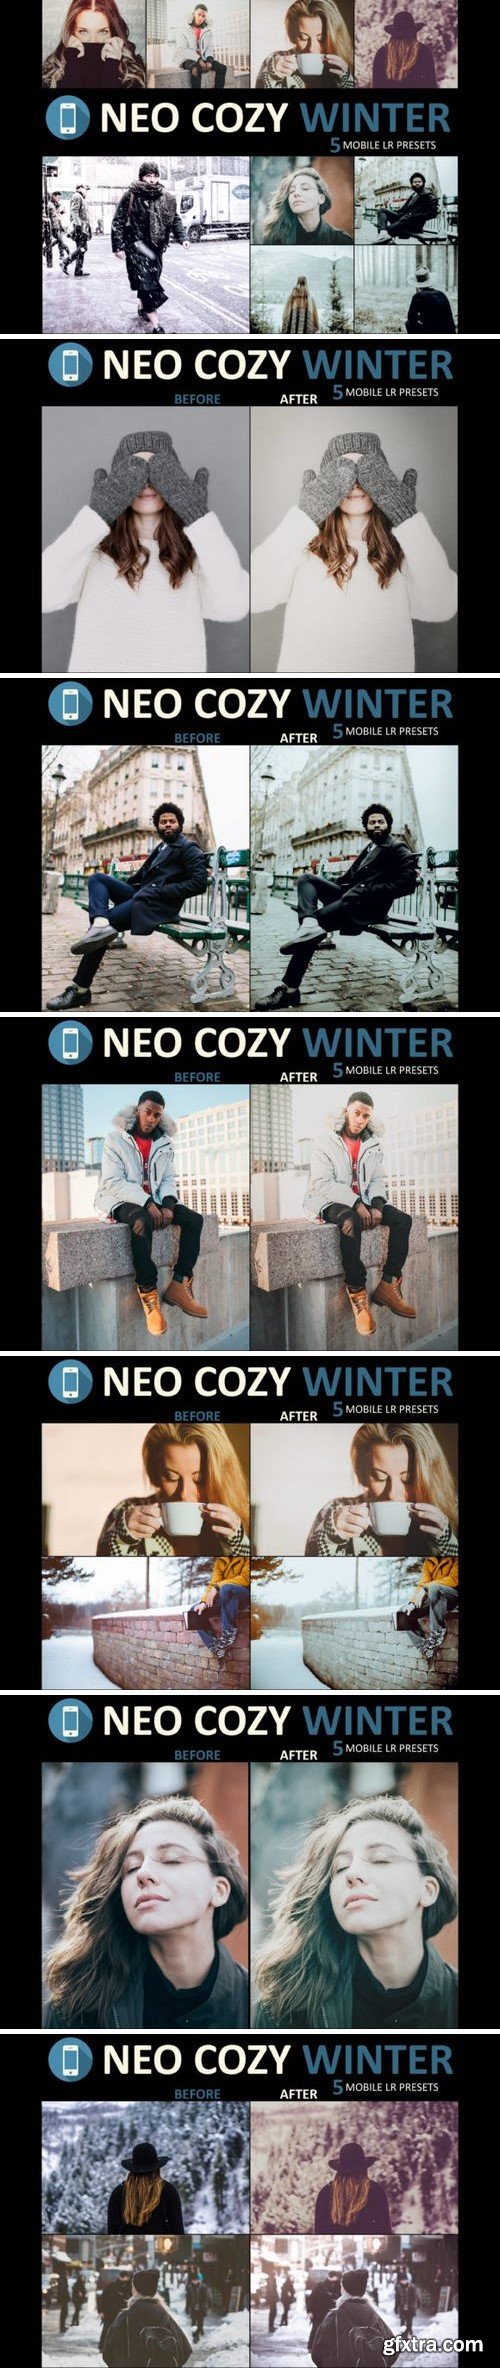 Neo Cozy Winter mobile lightroom presets